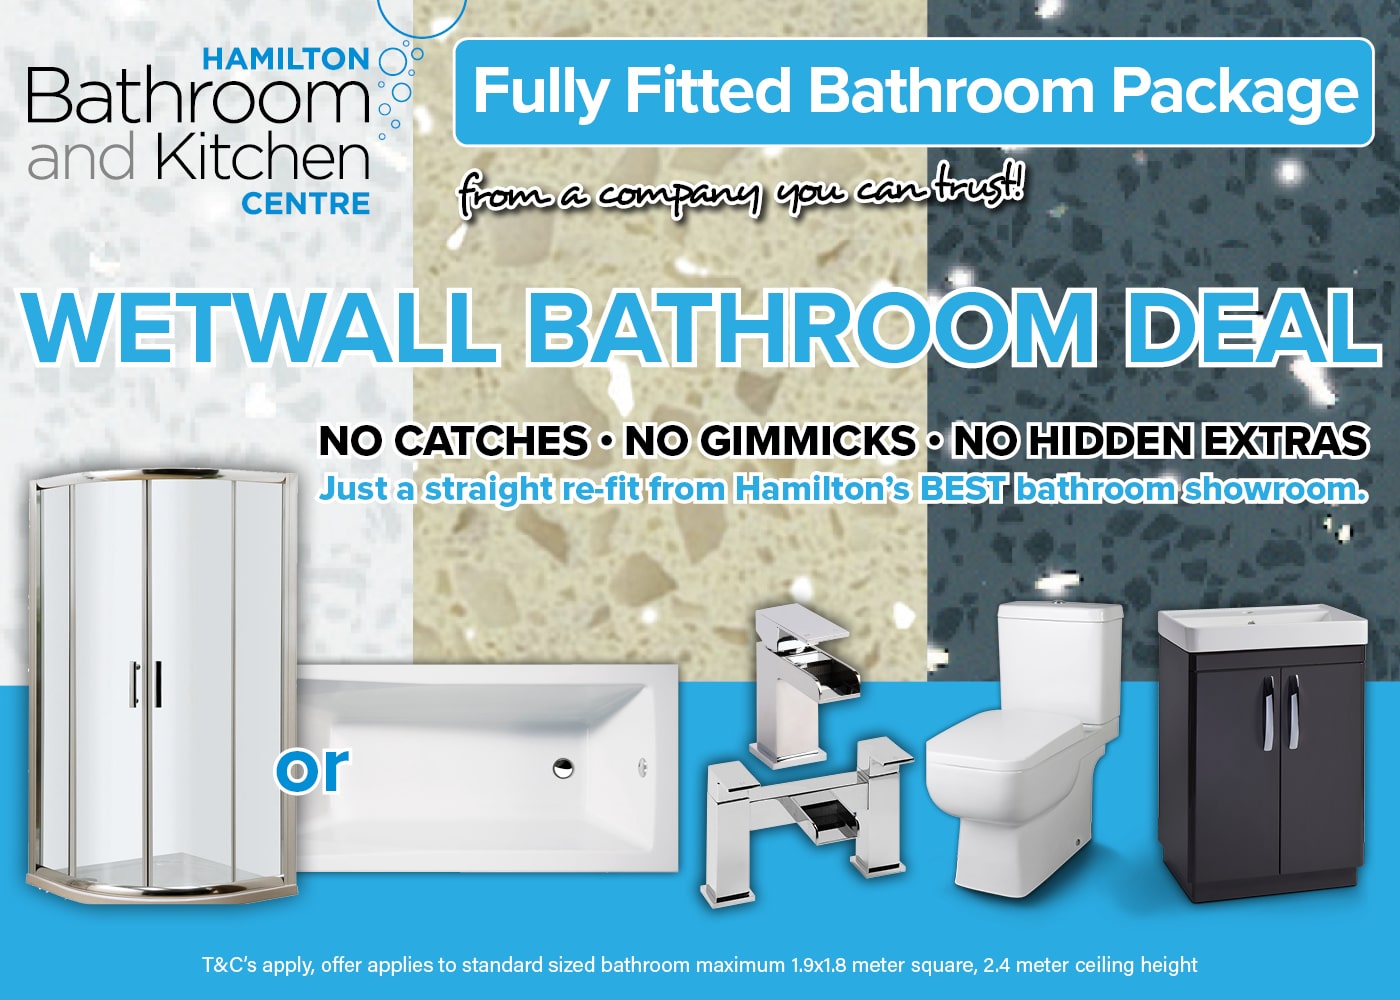 Wetwall Bathroom Deal Hamilton